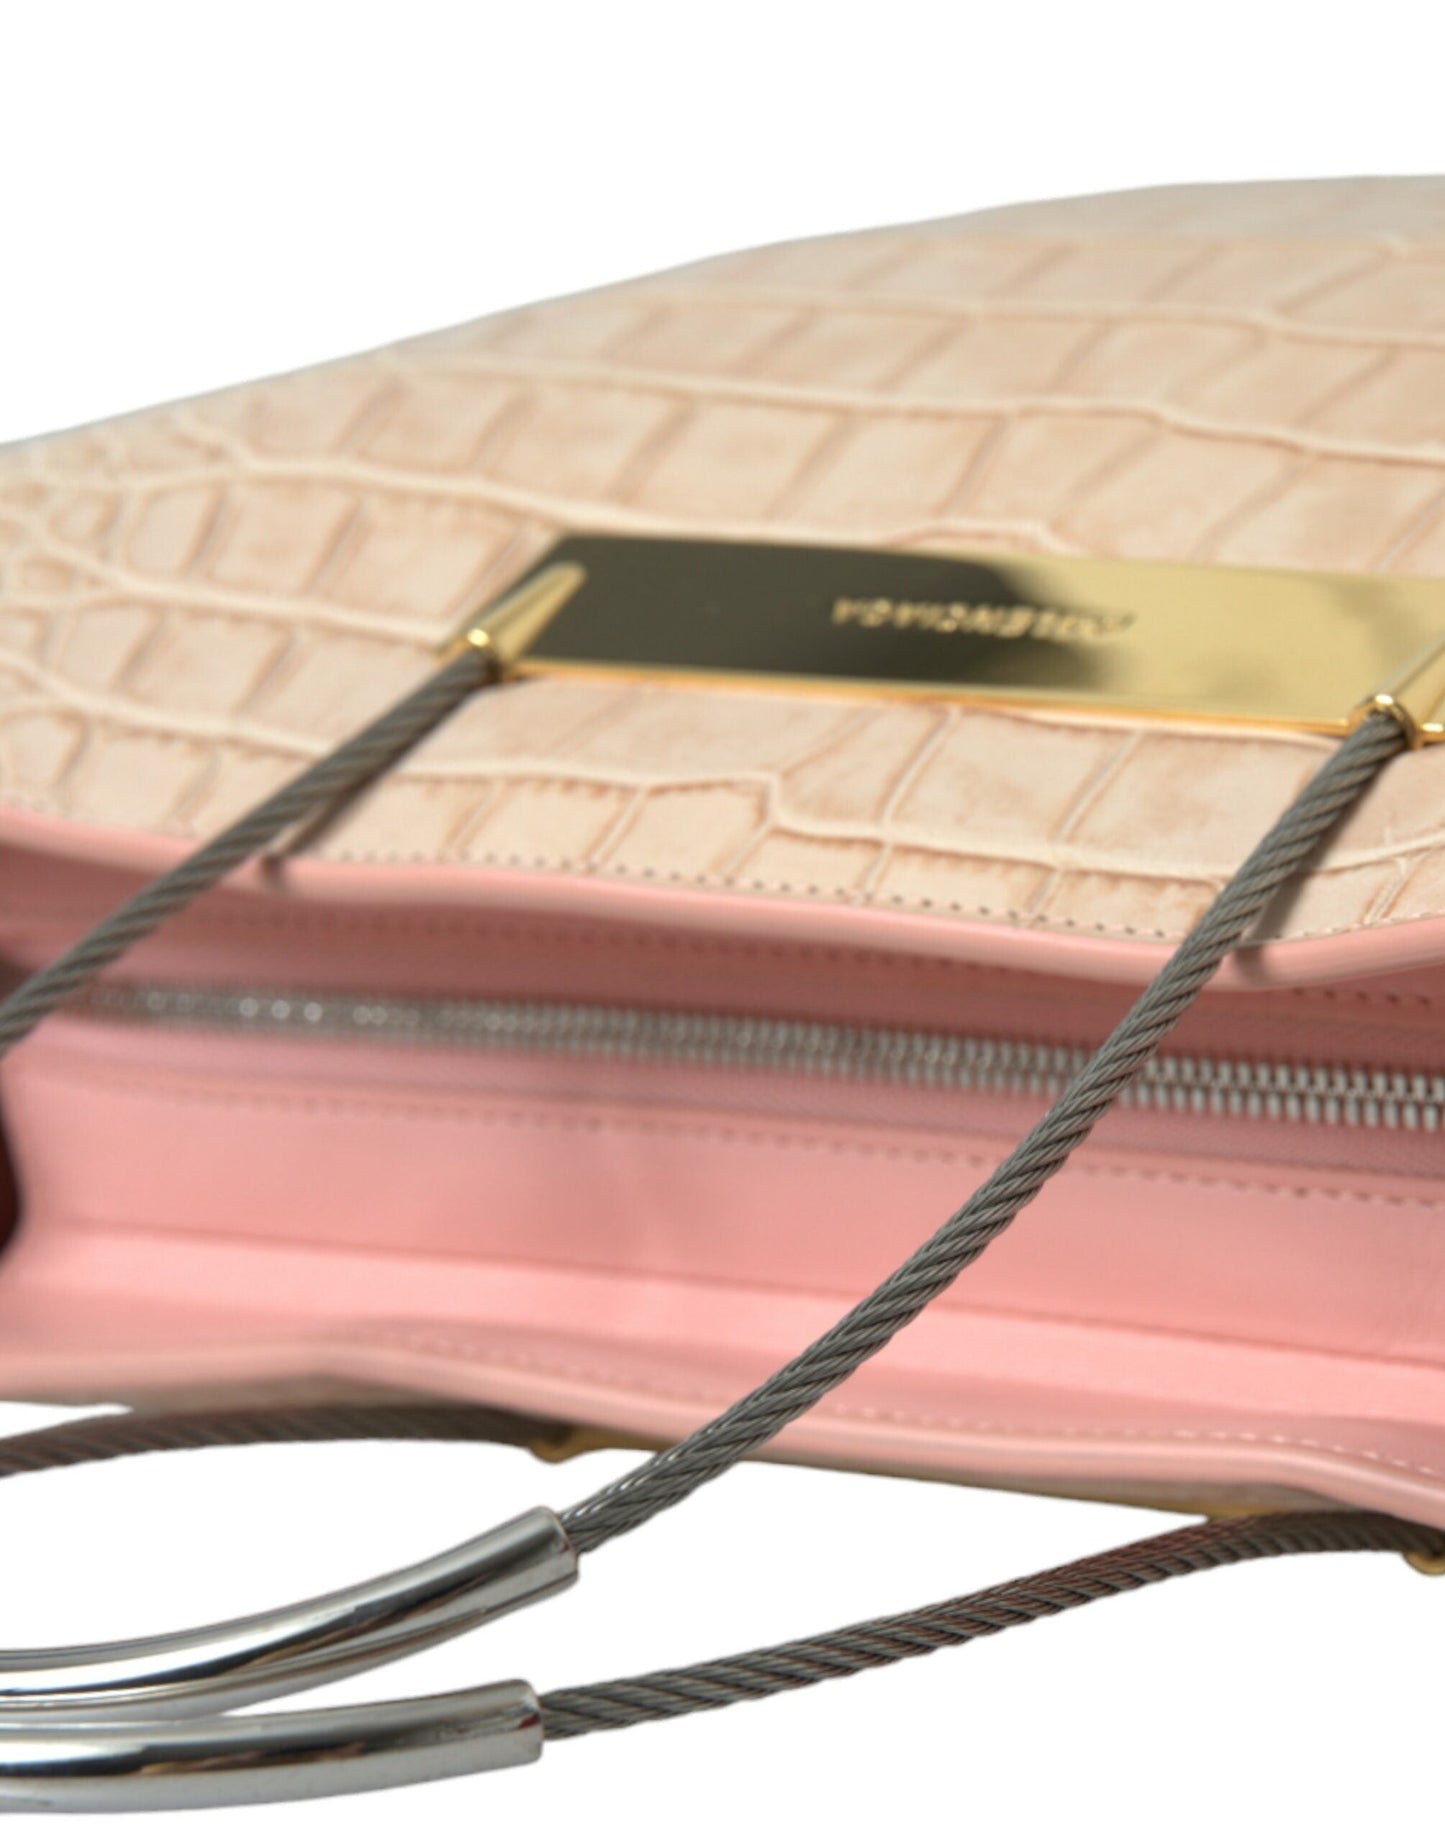 Balenciaga Alligator Leather Chic Pink Tote Bag | Fashionsarah.com